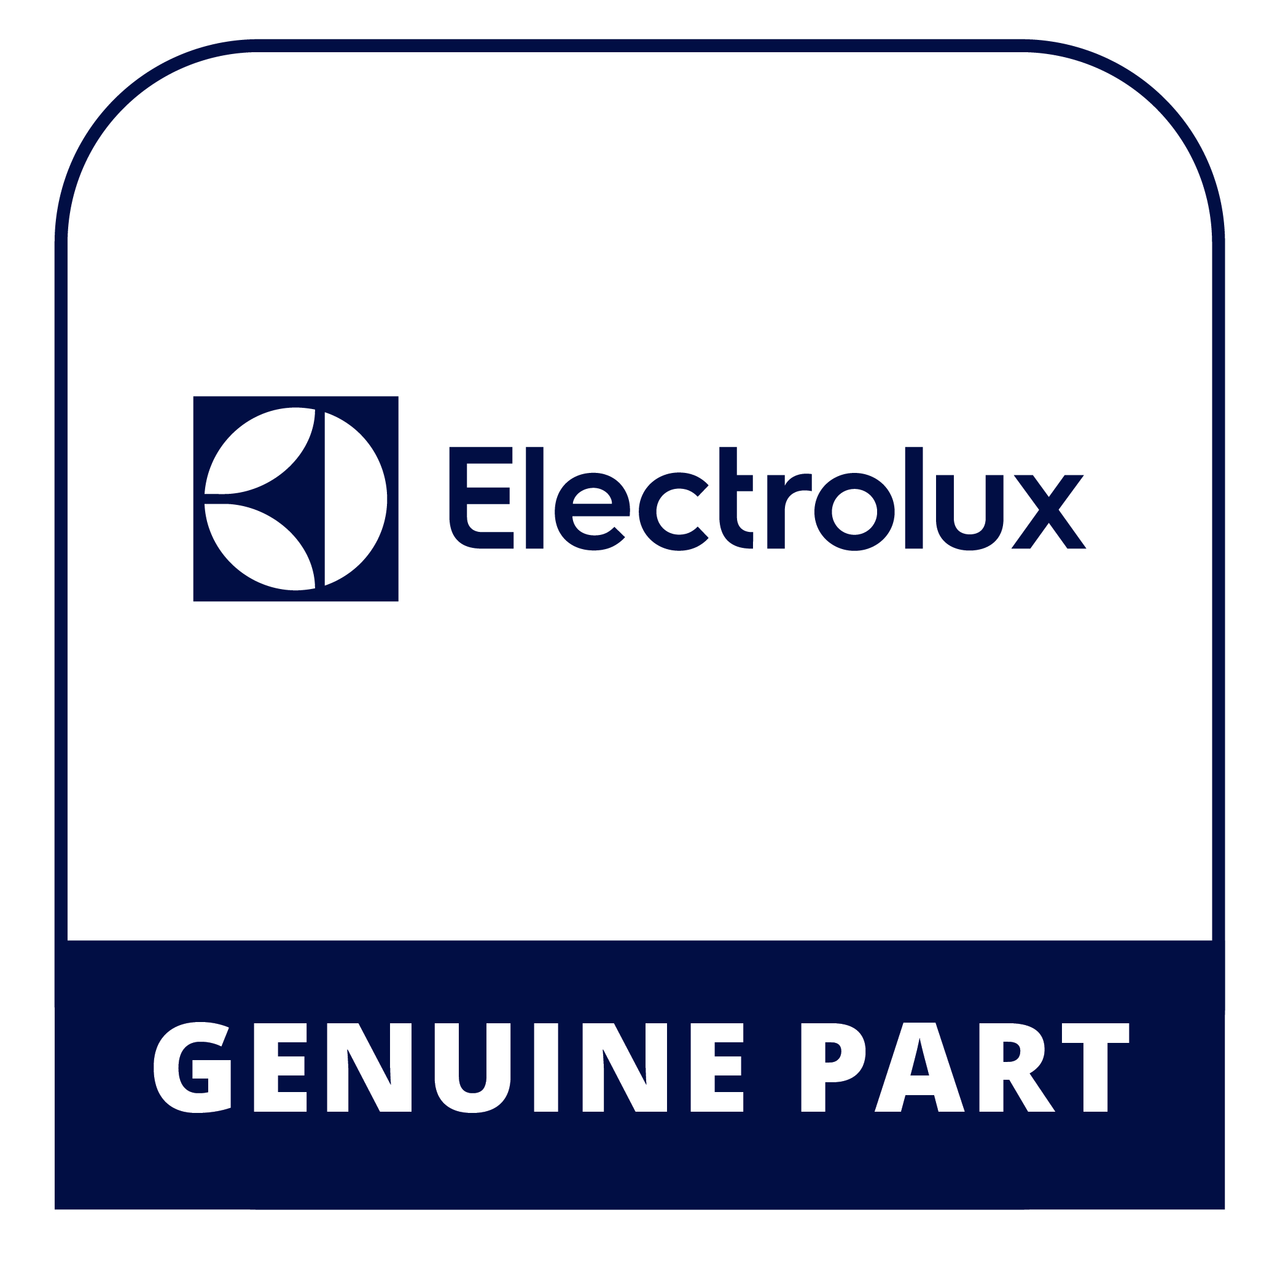 Frigidaire - Electrolux 5304521167 Overlay - Genuine Electrolux Part